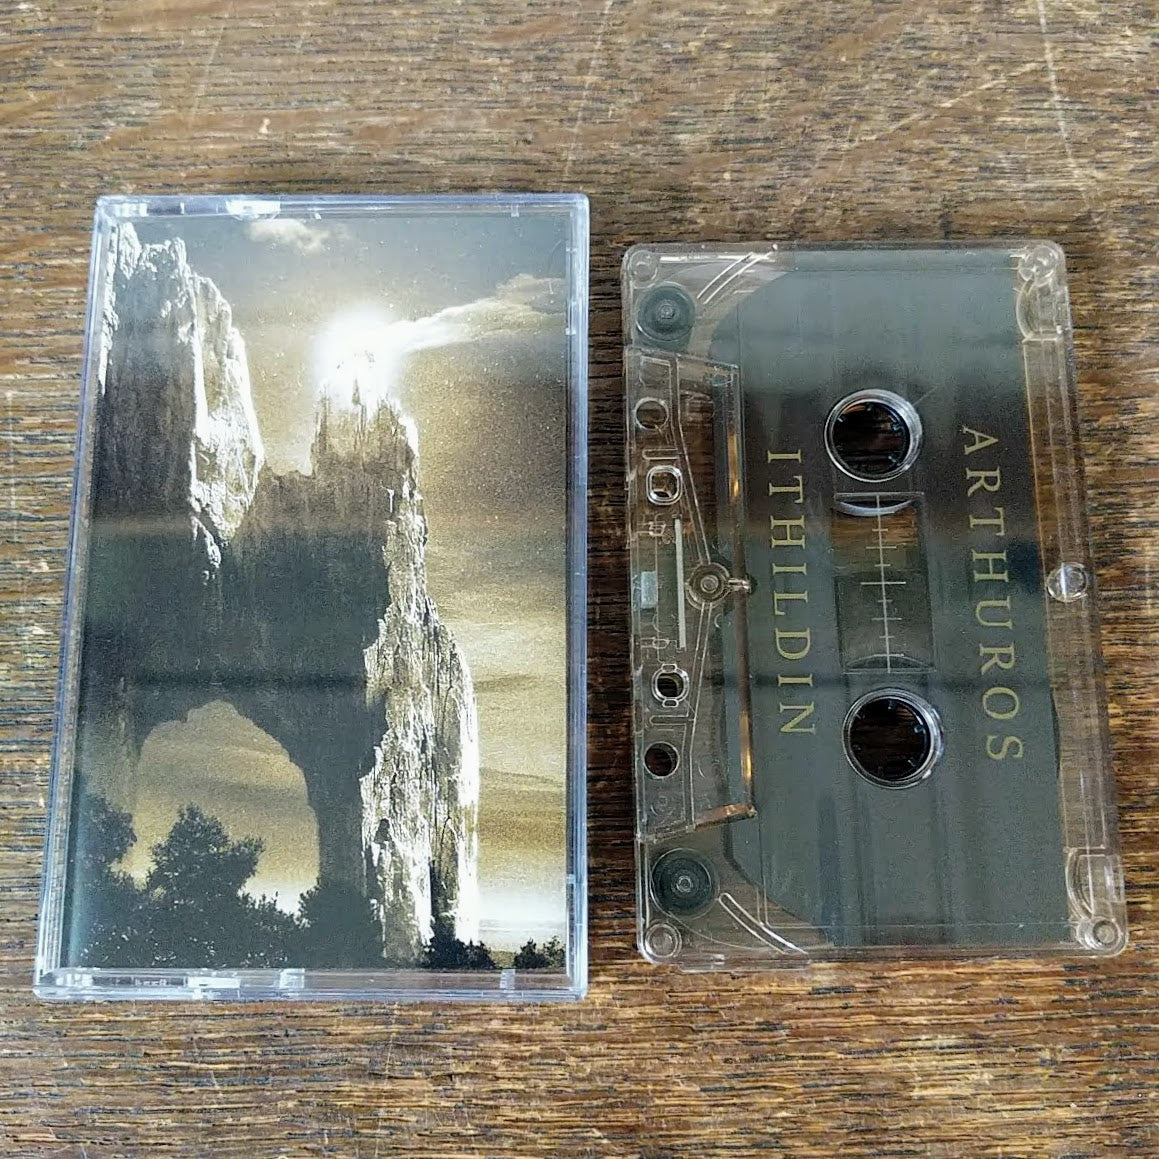 [SOLD OUT] ARTHUROS "Ithildin" (Reissue) Cassette Tape